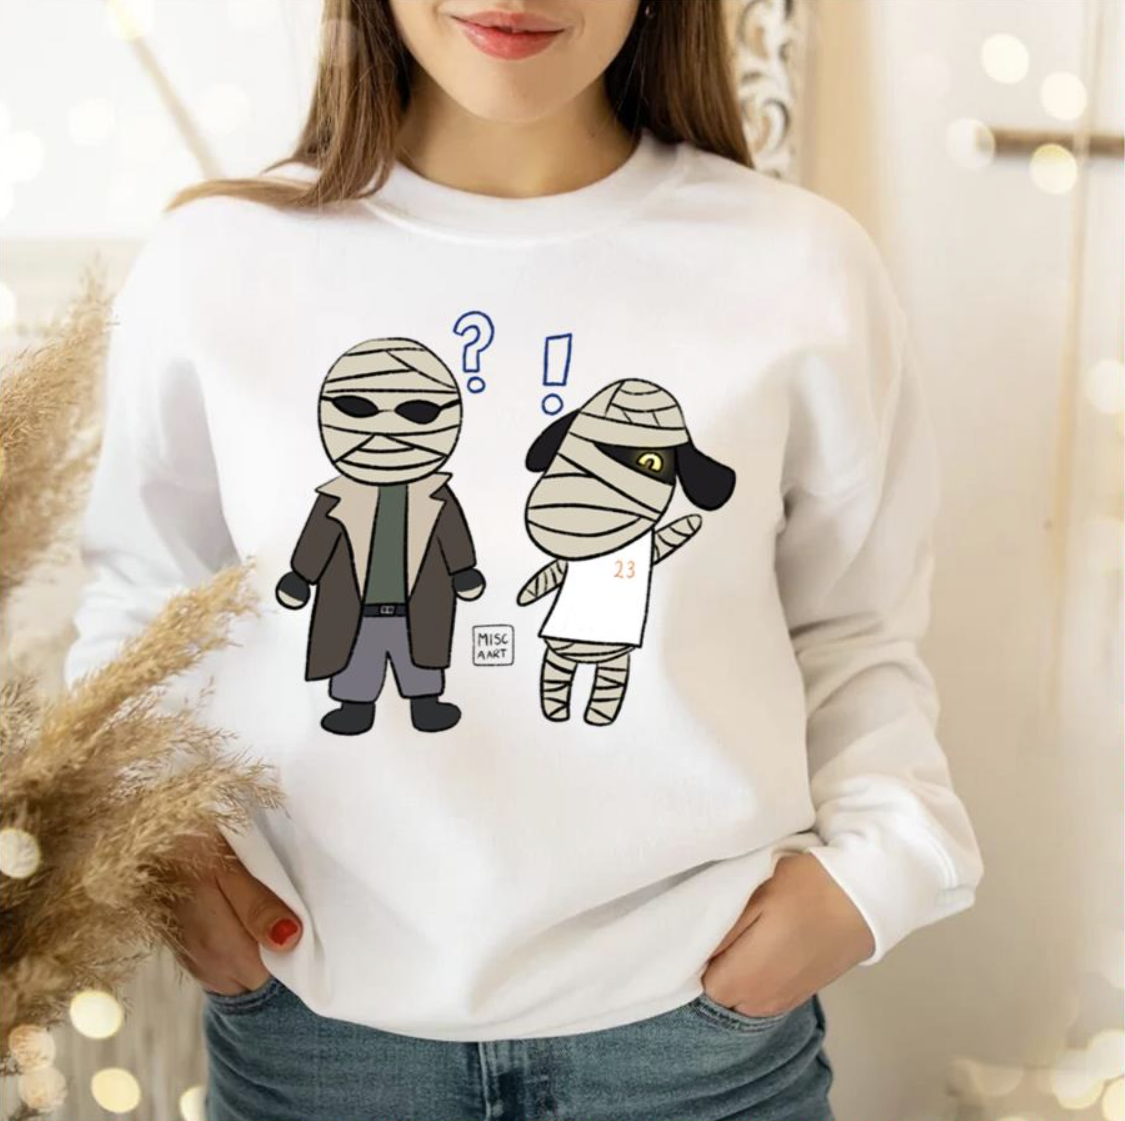 The Mummies Doom Patrol Parody shirt